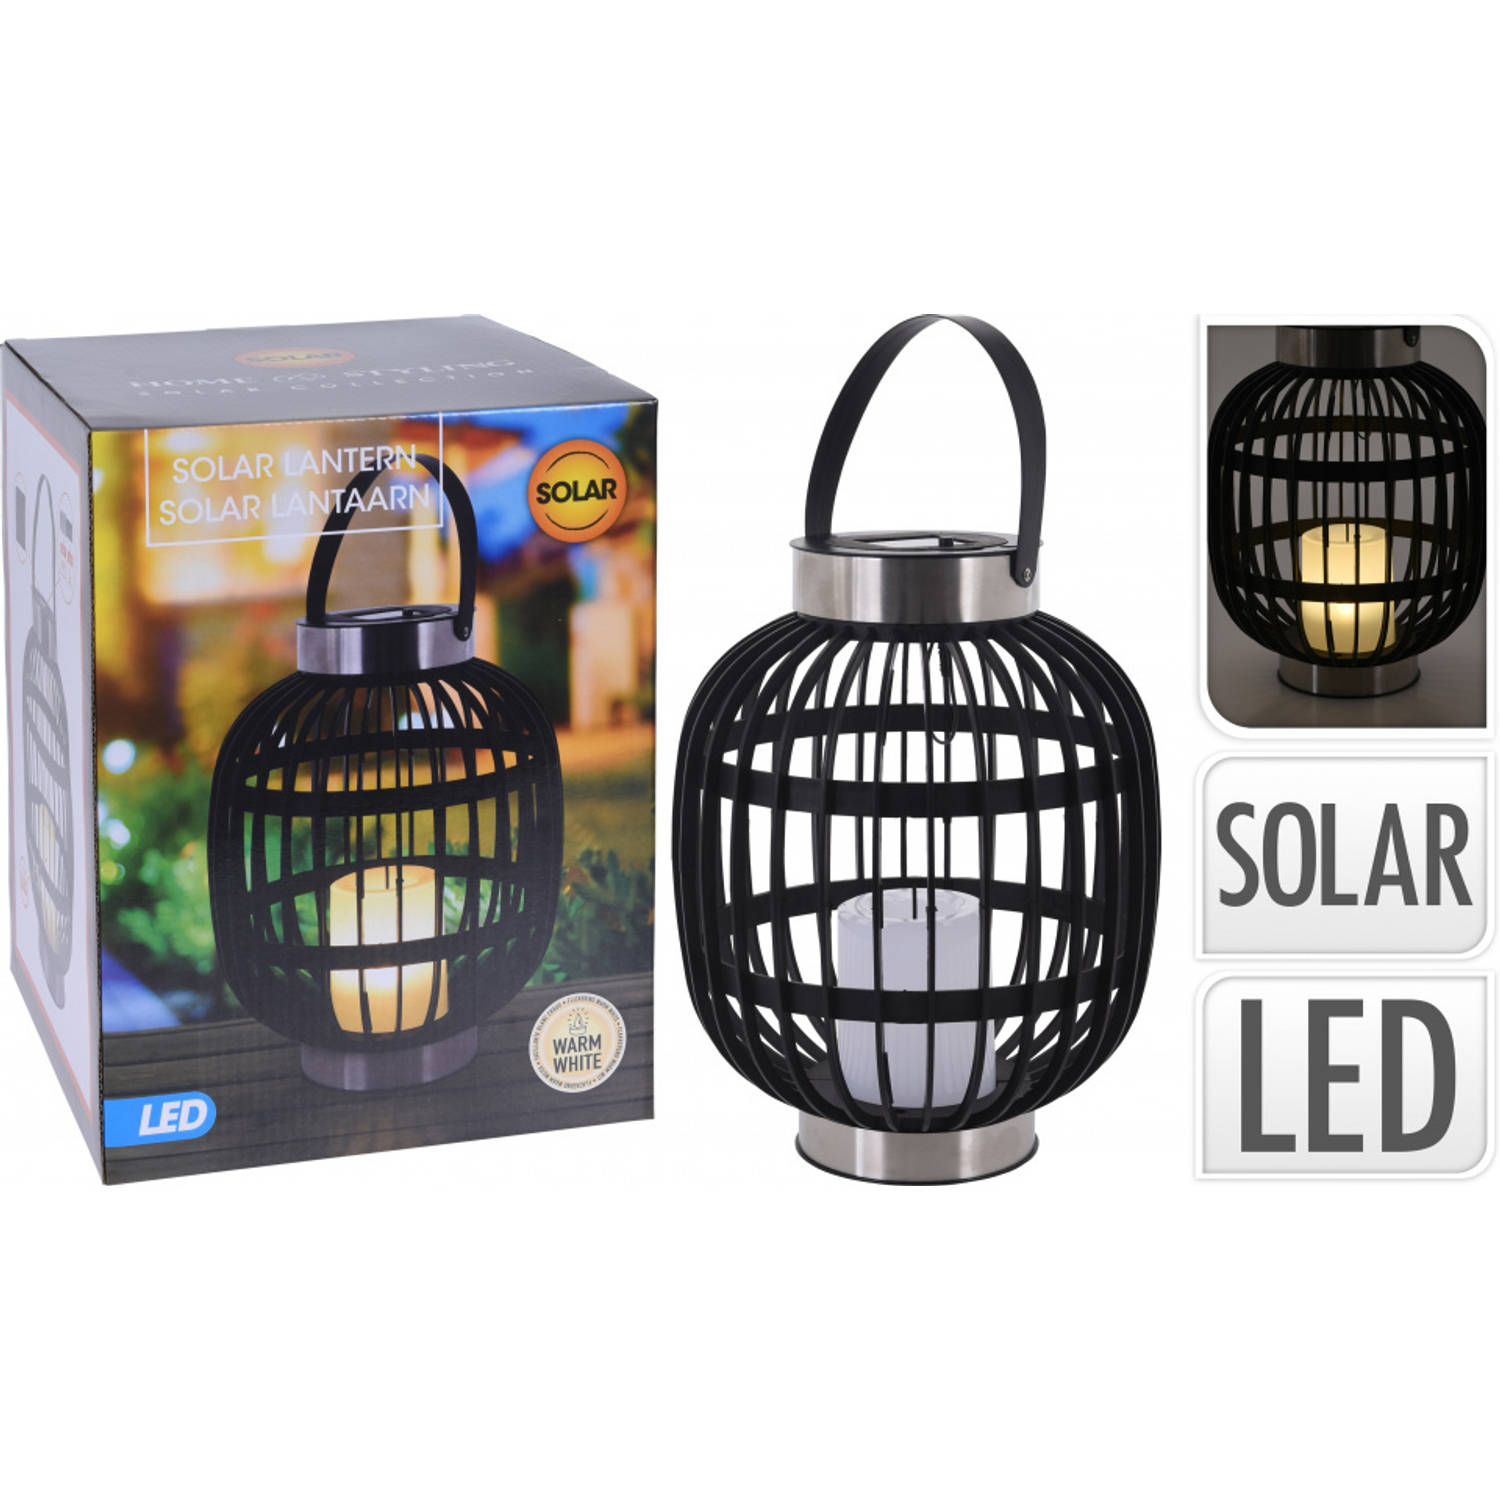 Vernauwd Vriendin kloon Home & Styling - Solar buitenlamp lantaarn - LED windlicht kaars | Blokker